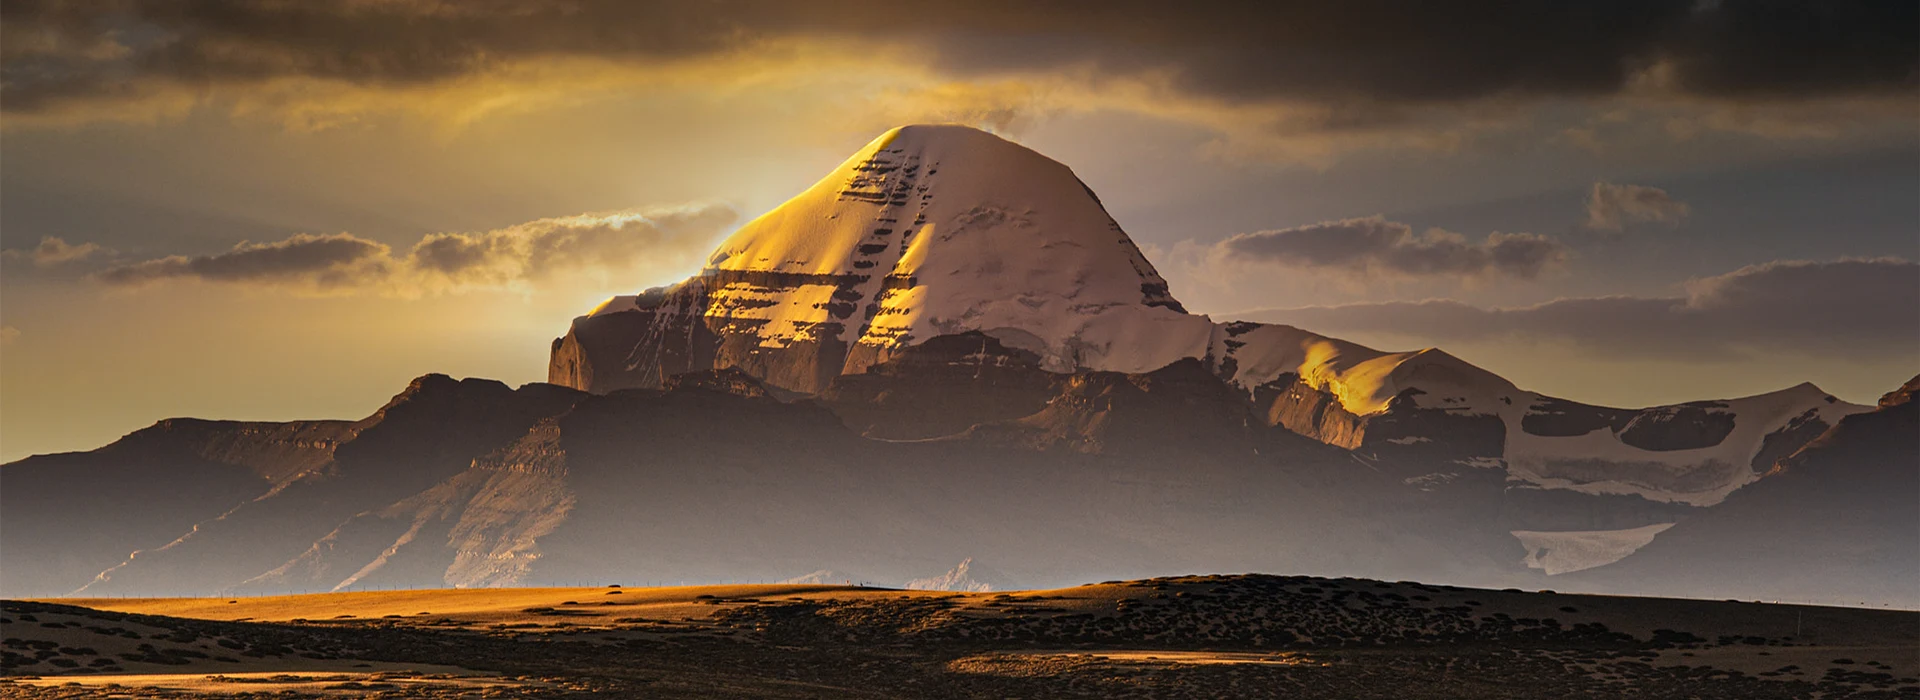 Mount Kailash – holiest pilgrimage sites for Hinduism, Buddhism, Jainism, and Bon.